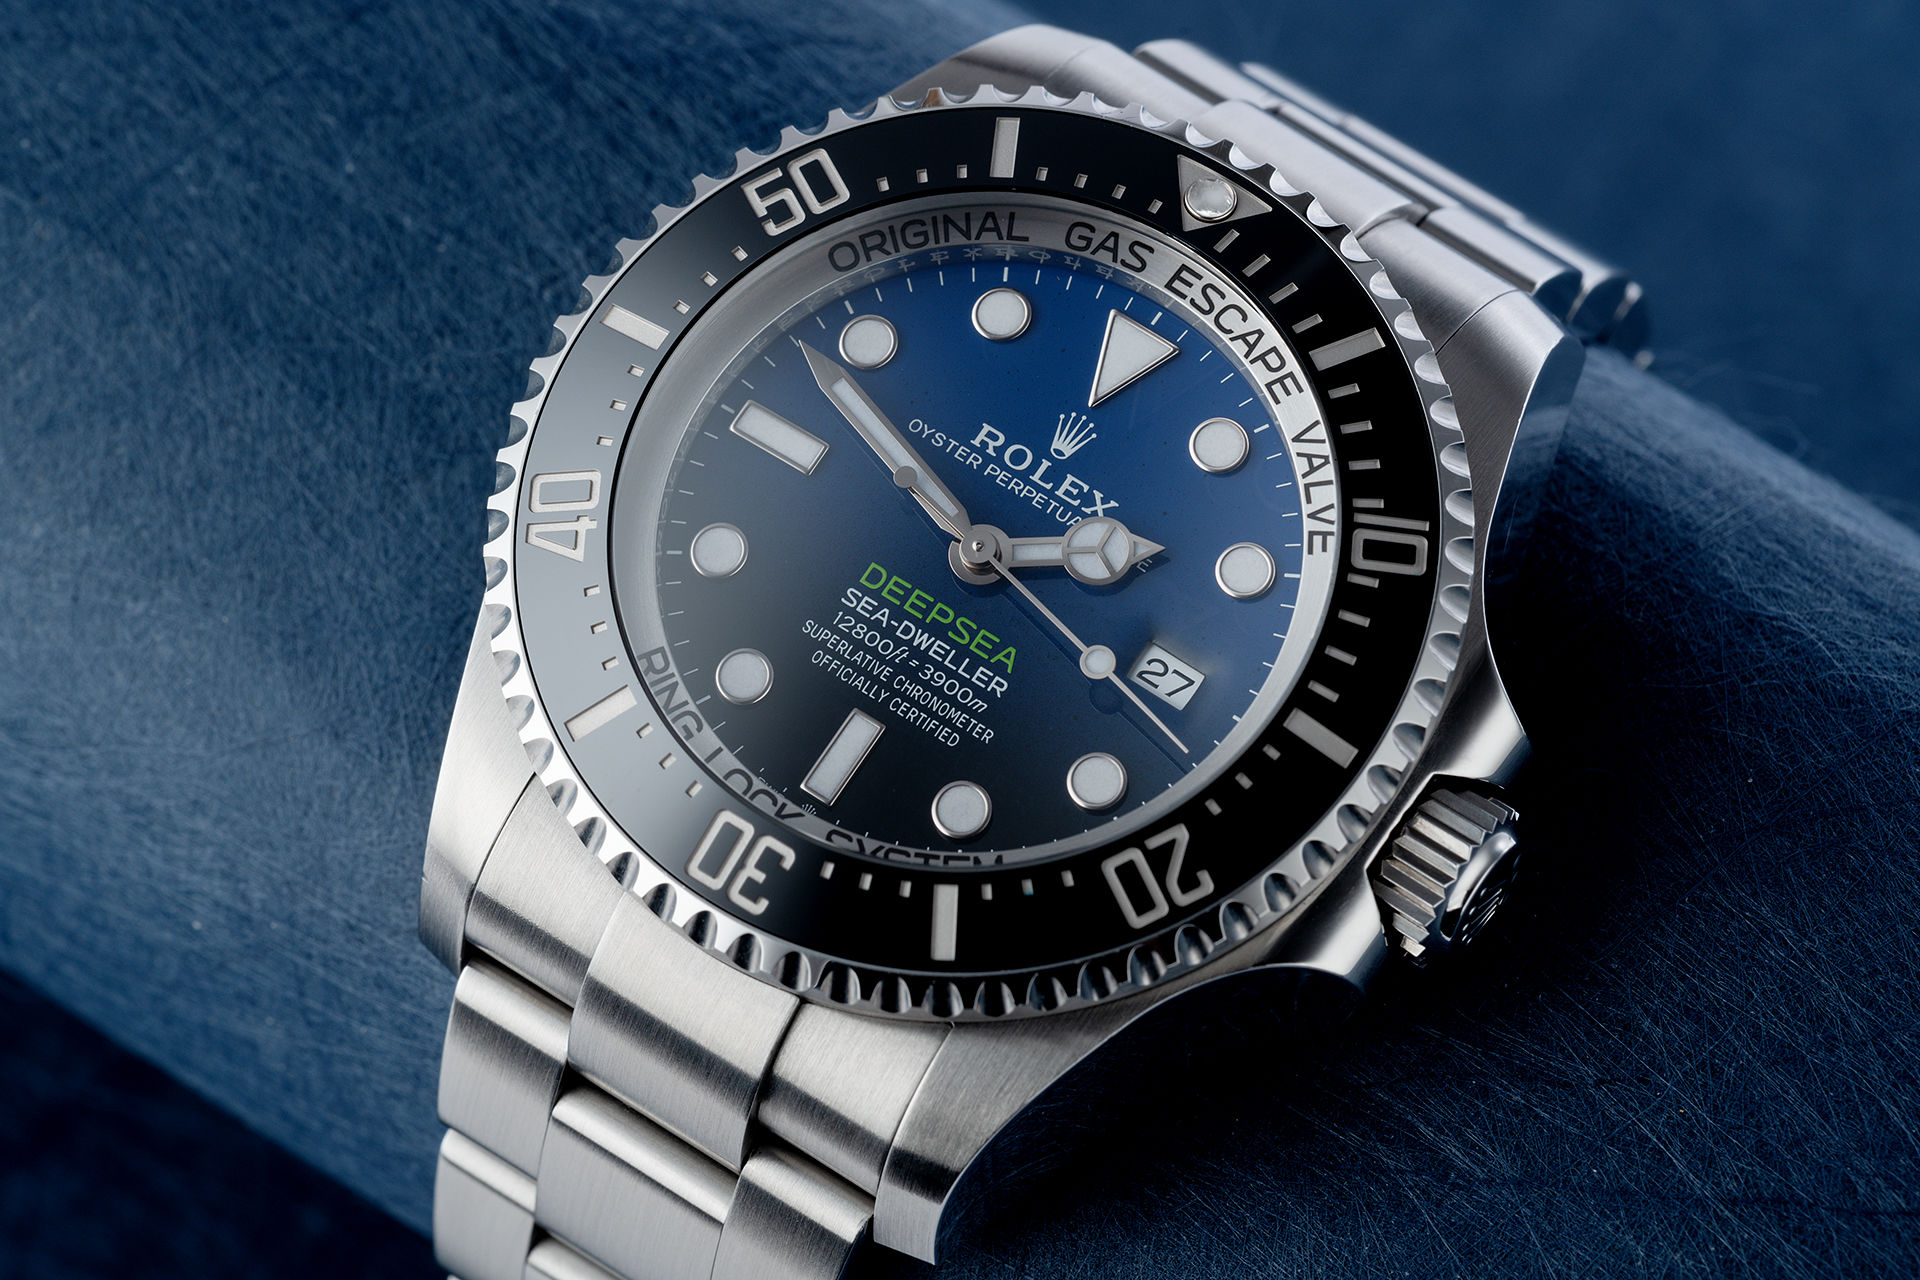 ref 126660 | 5 Year Warranty 'Latest 3235 Calibre' | Rolex Deepsea D-Blue